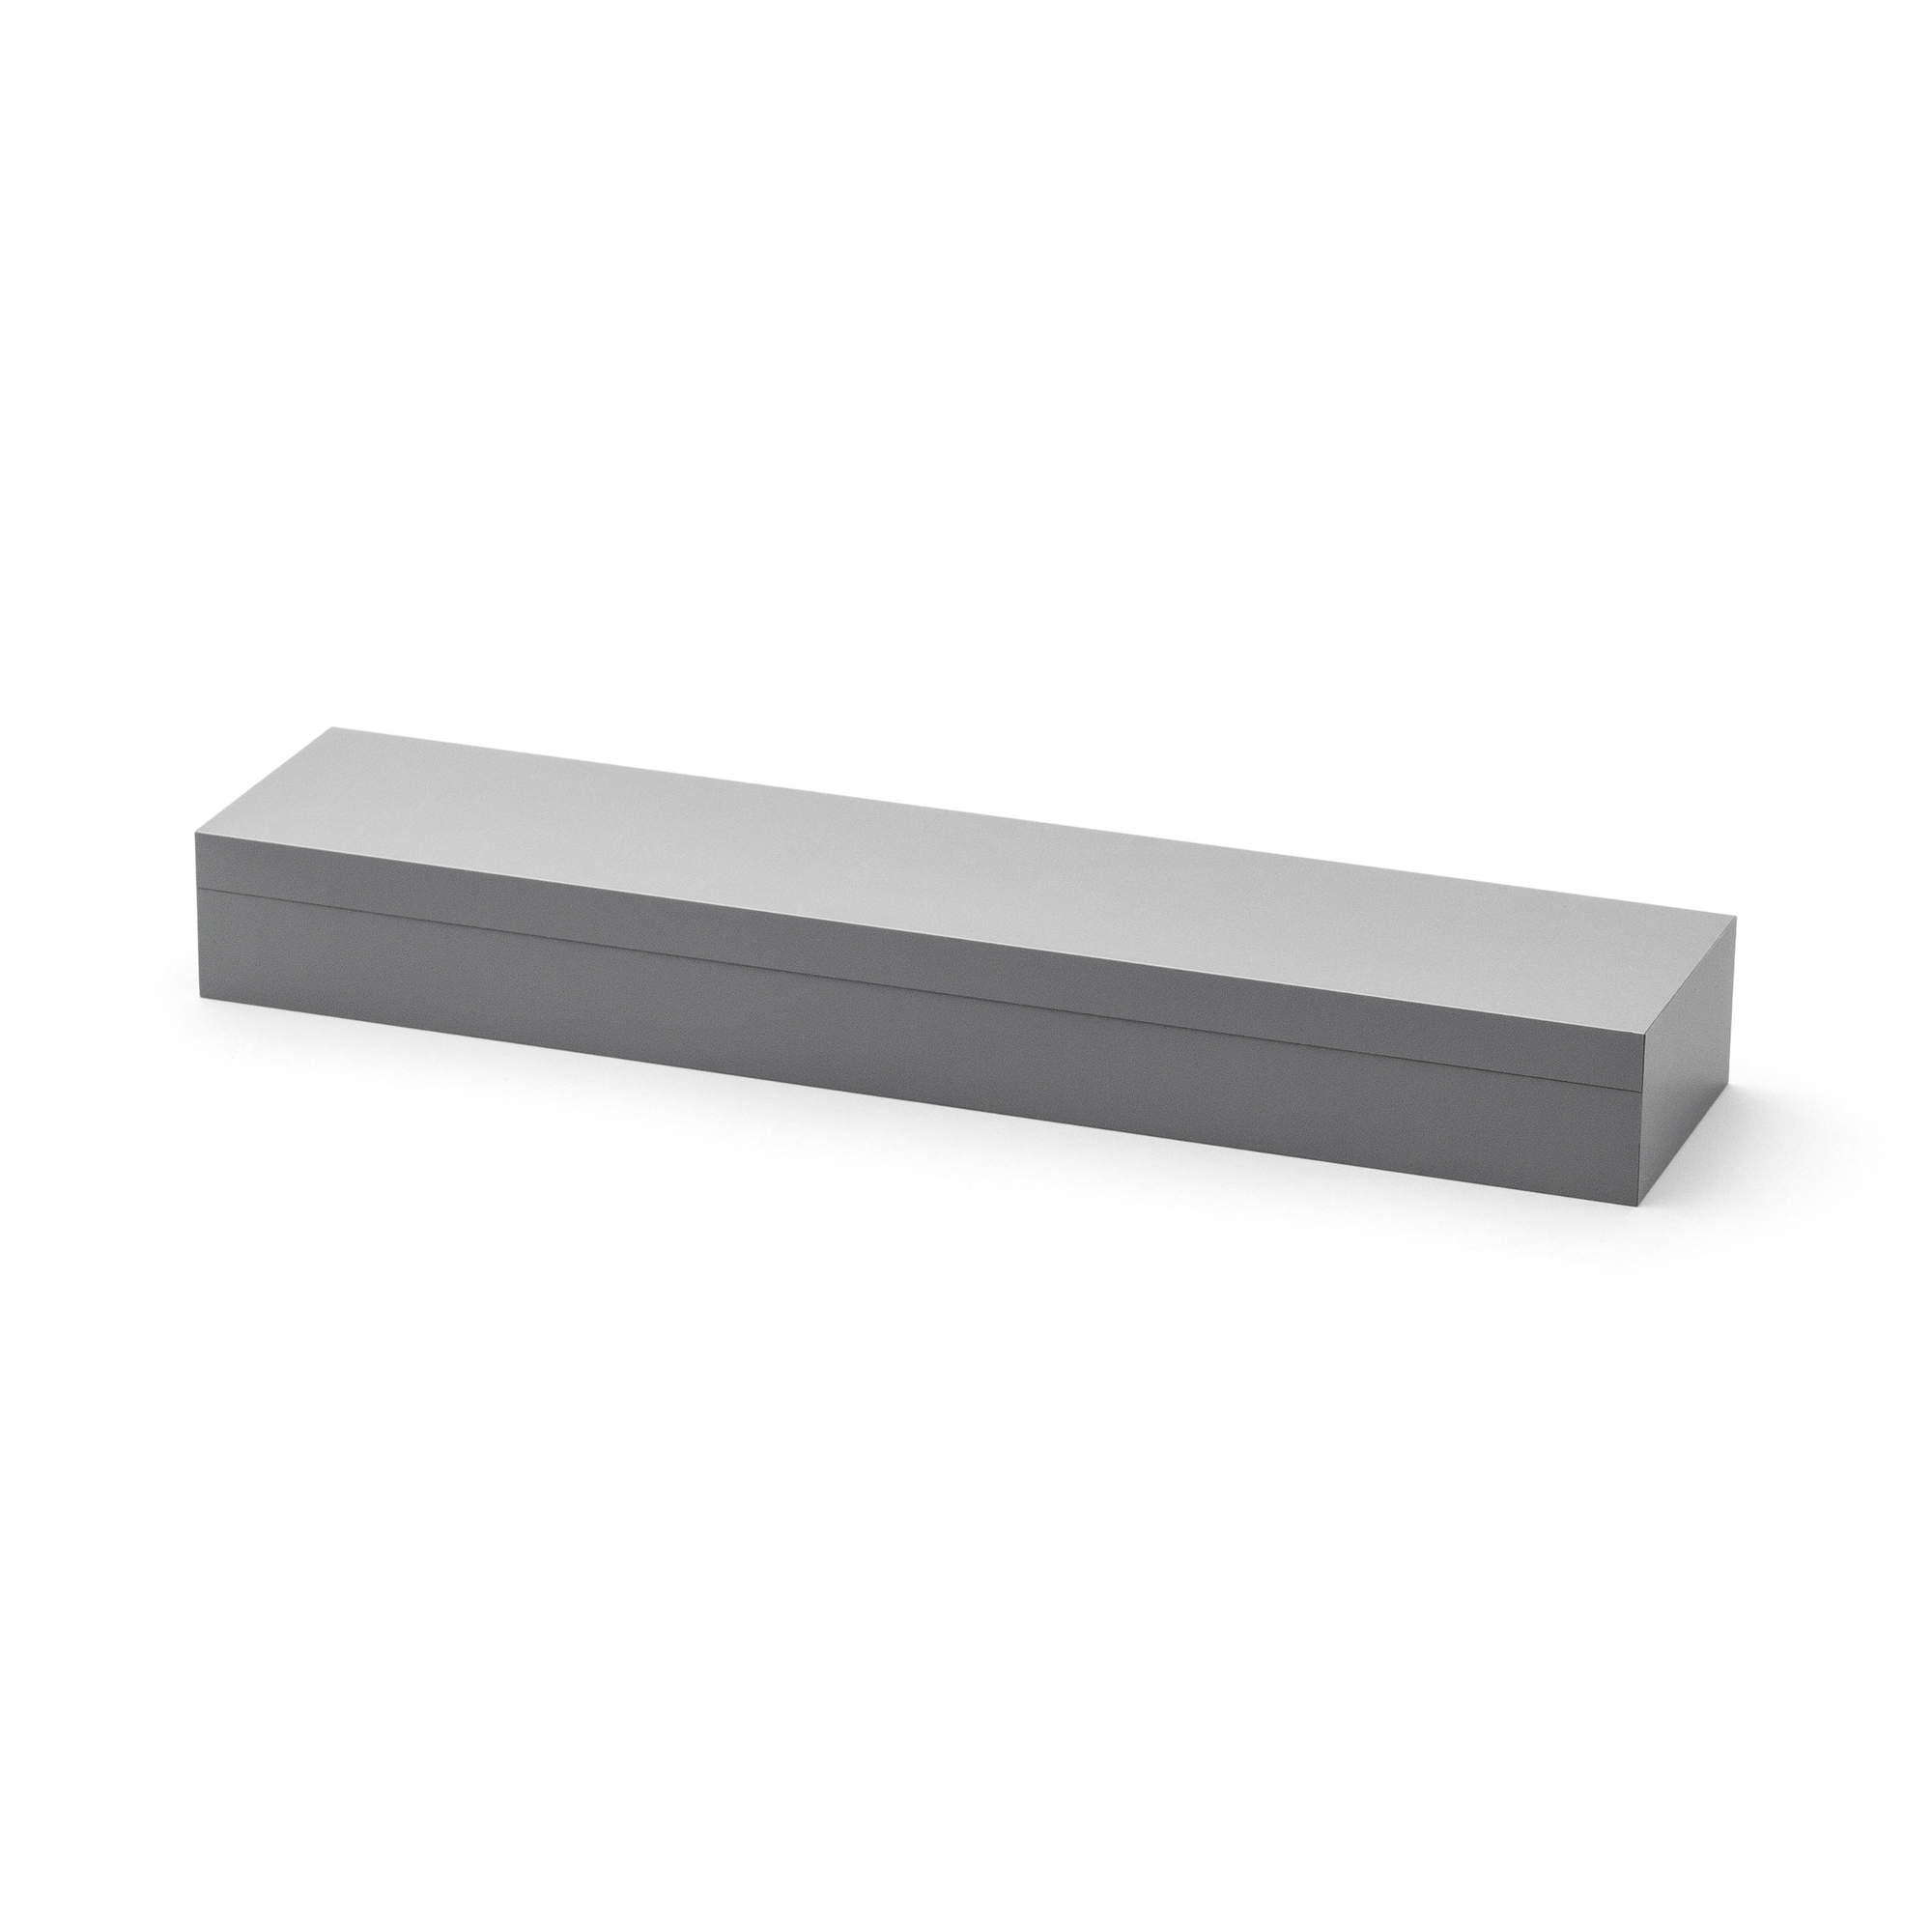 Greybox Armband, 255 x 57 x 30 mm